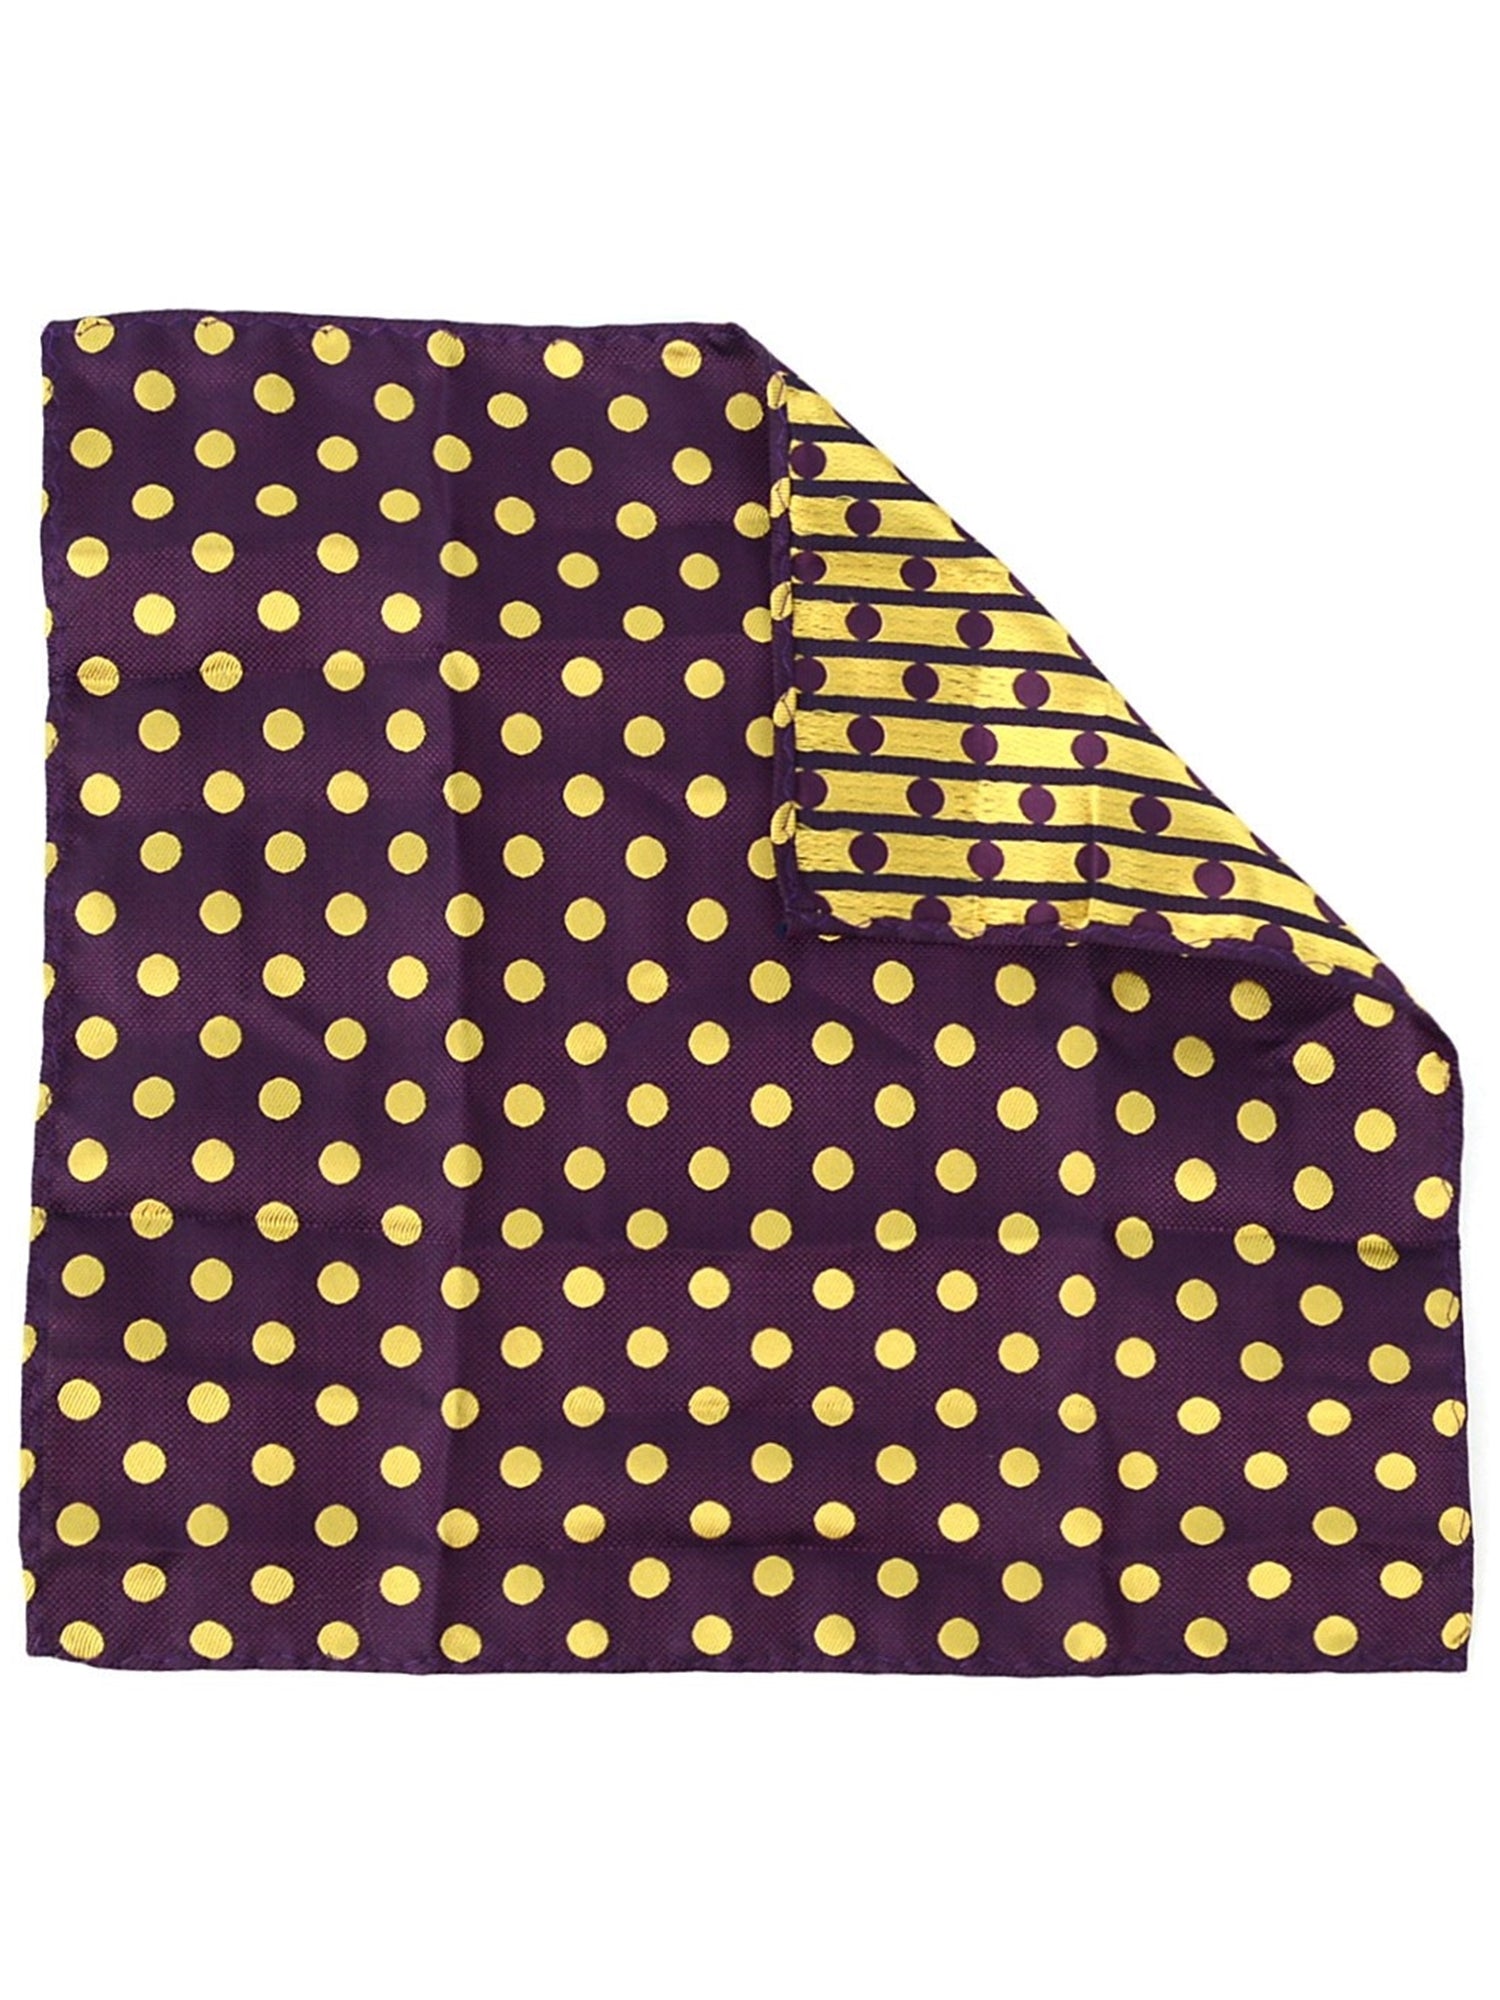 Men's Black And Gold Polka Dots Pre-tied Adjustable Length Bow Tie & Hanky Set Men's Solid Color Bow Tie TheDapperTie   